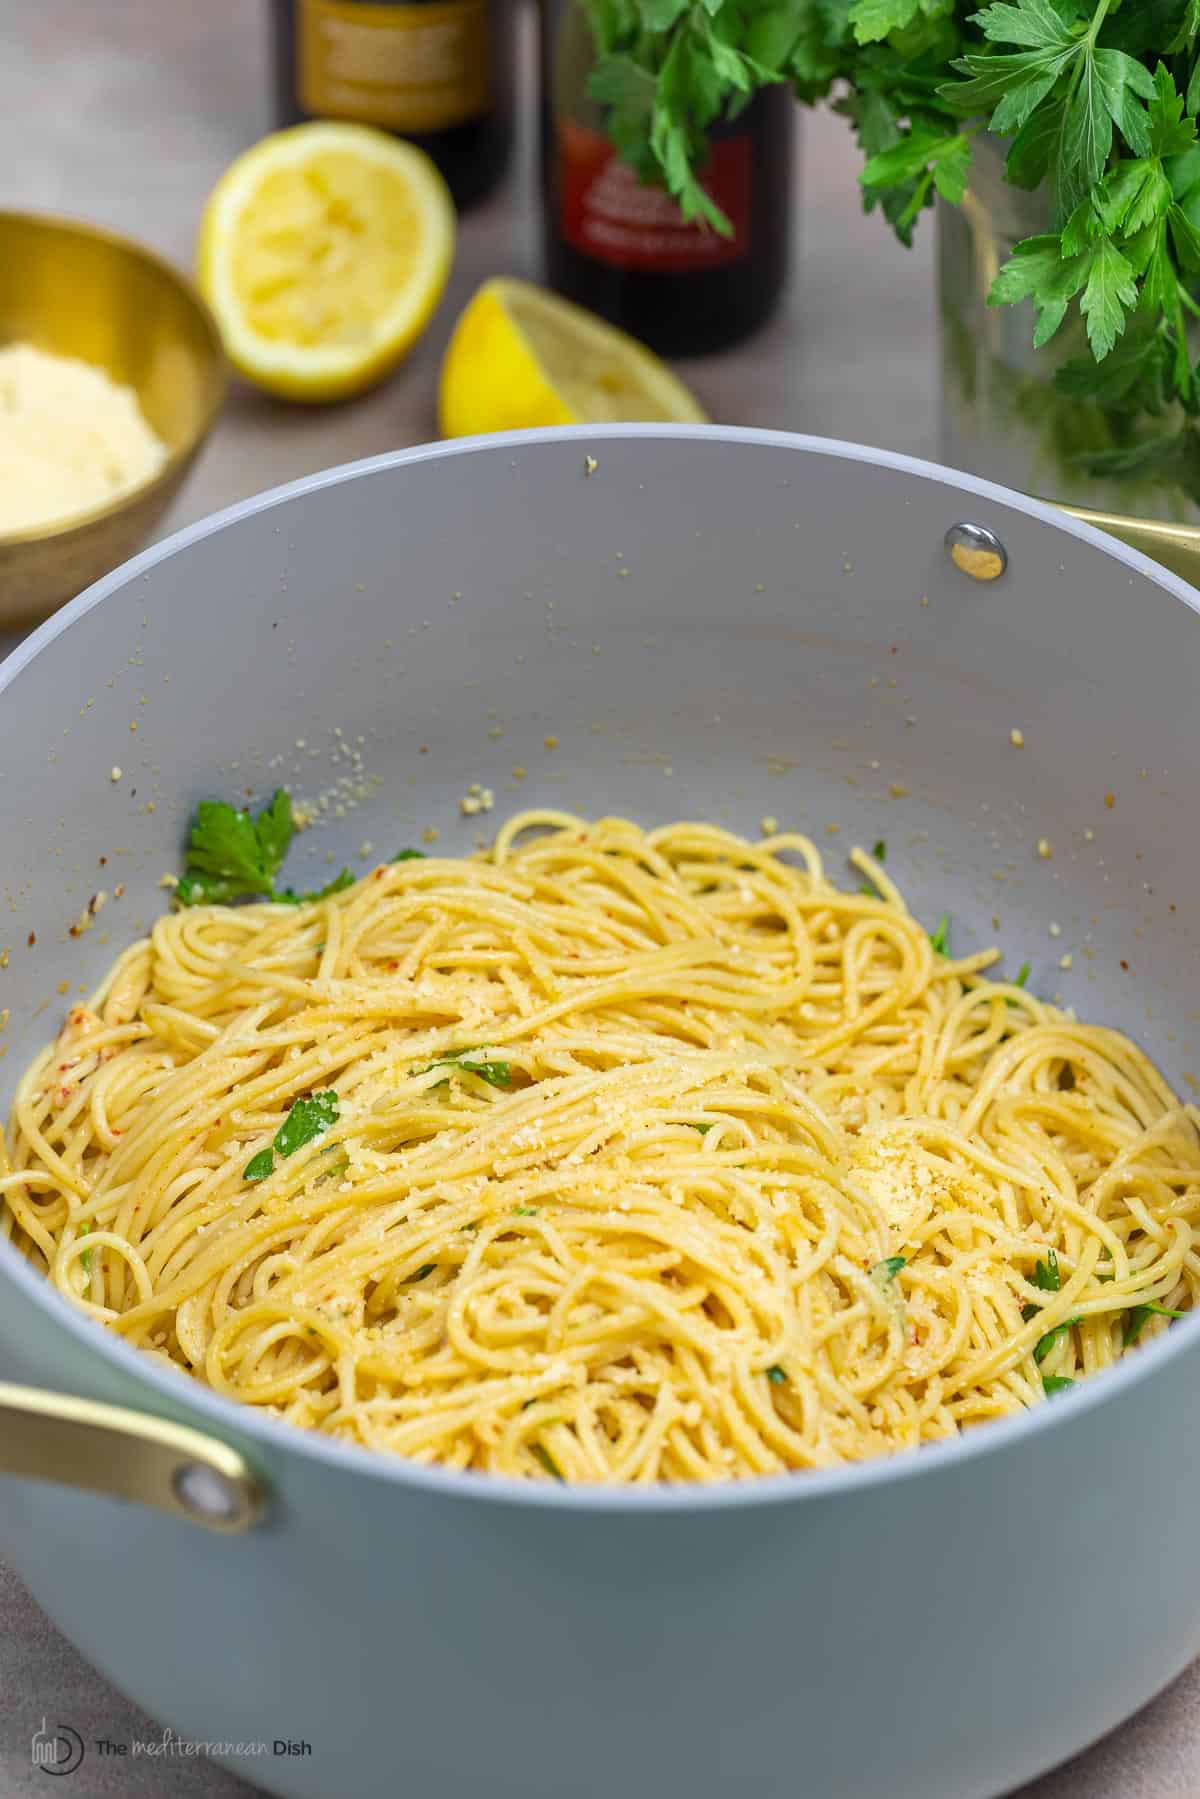 15-Minute Lemon Pasta (No Cream or Butter!) | The Mediterranean Dish